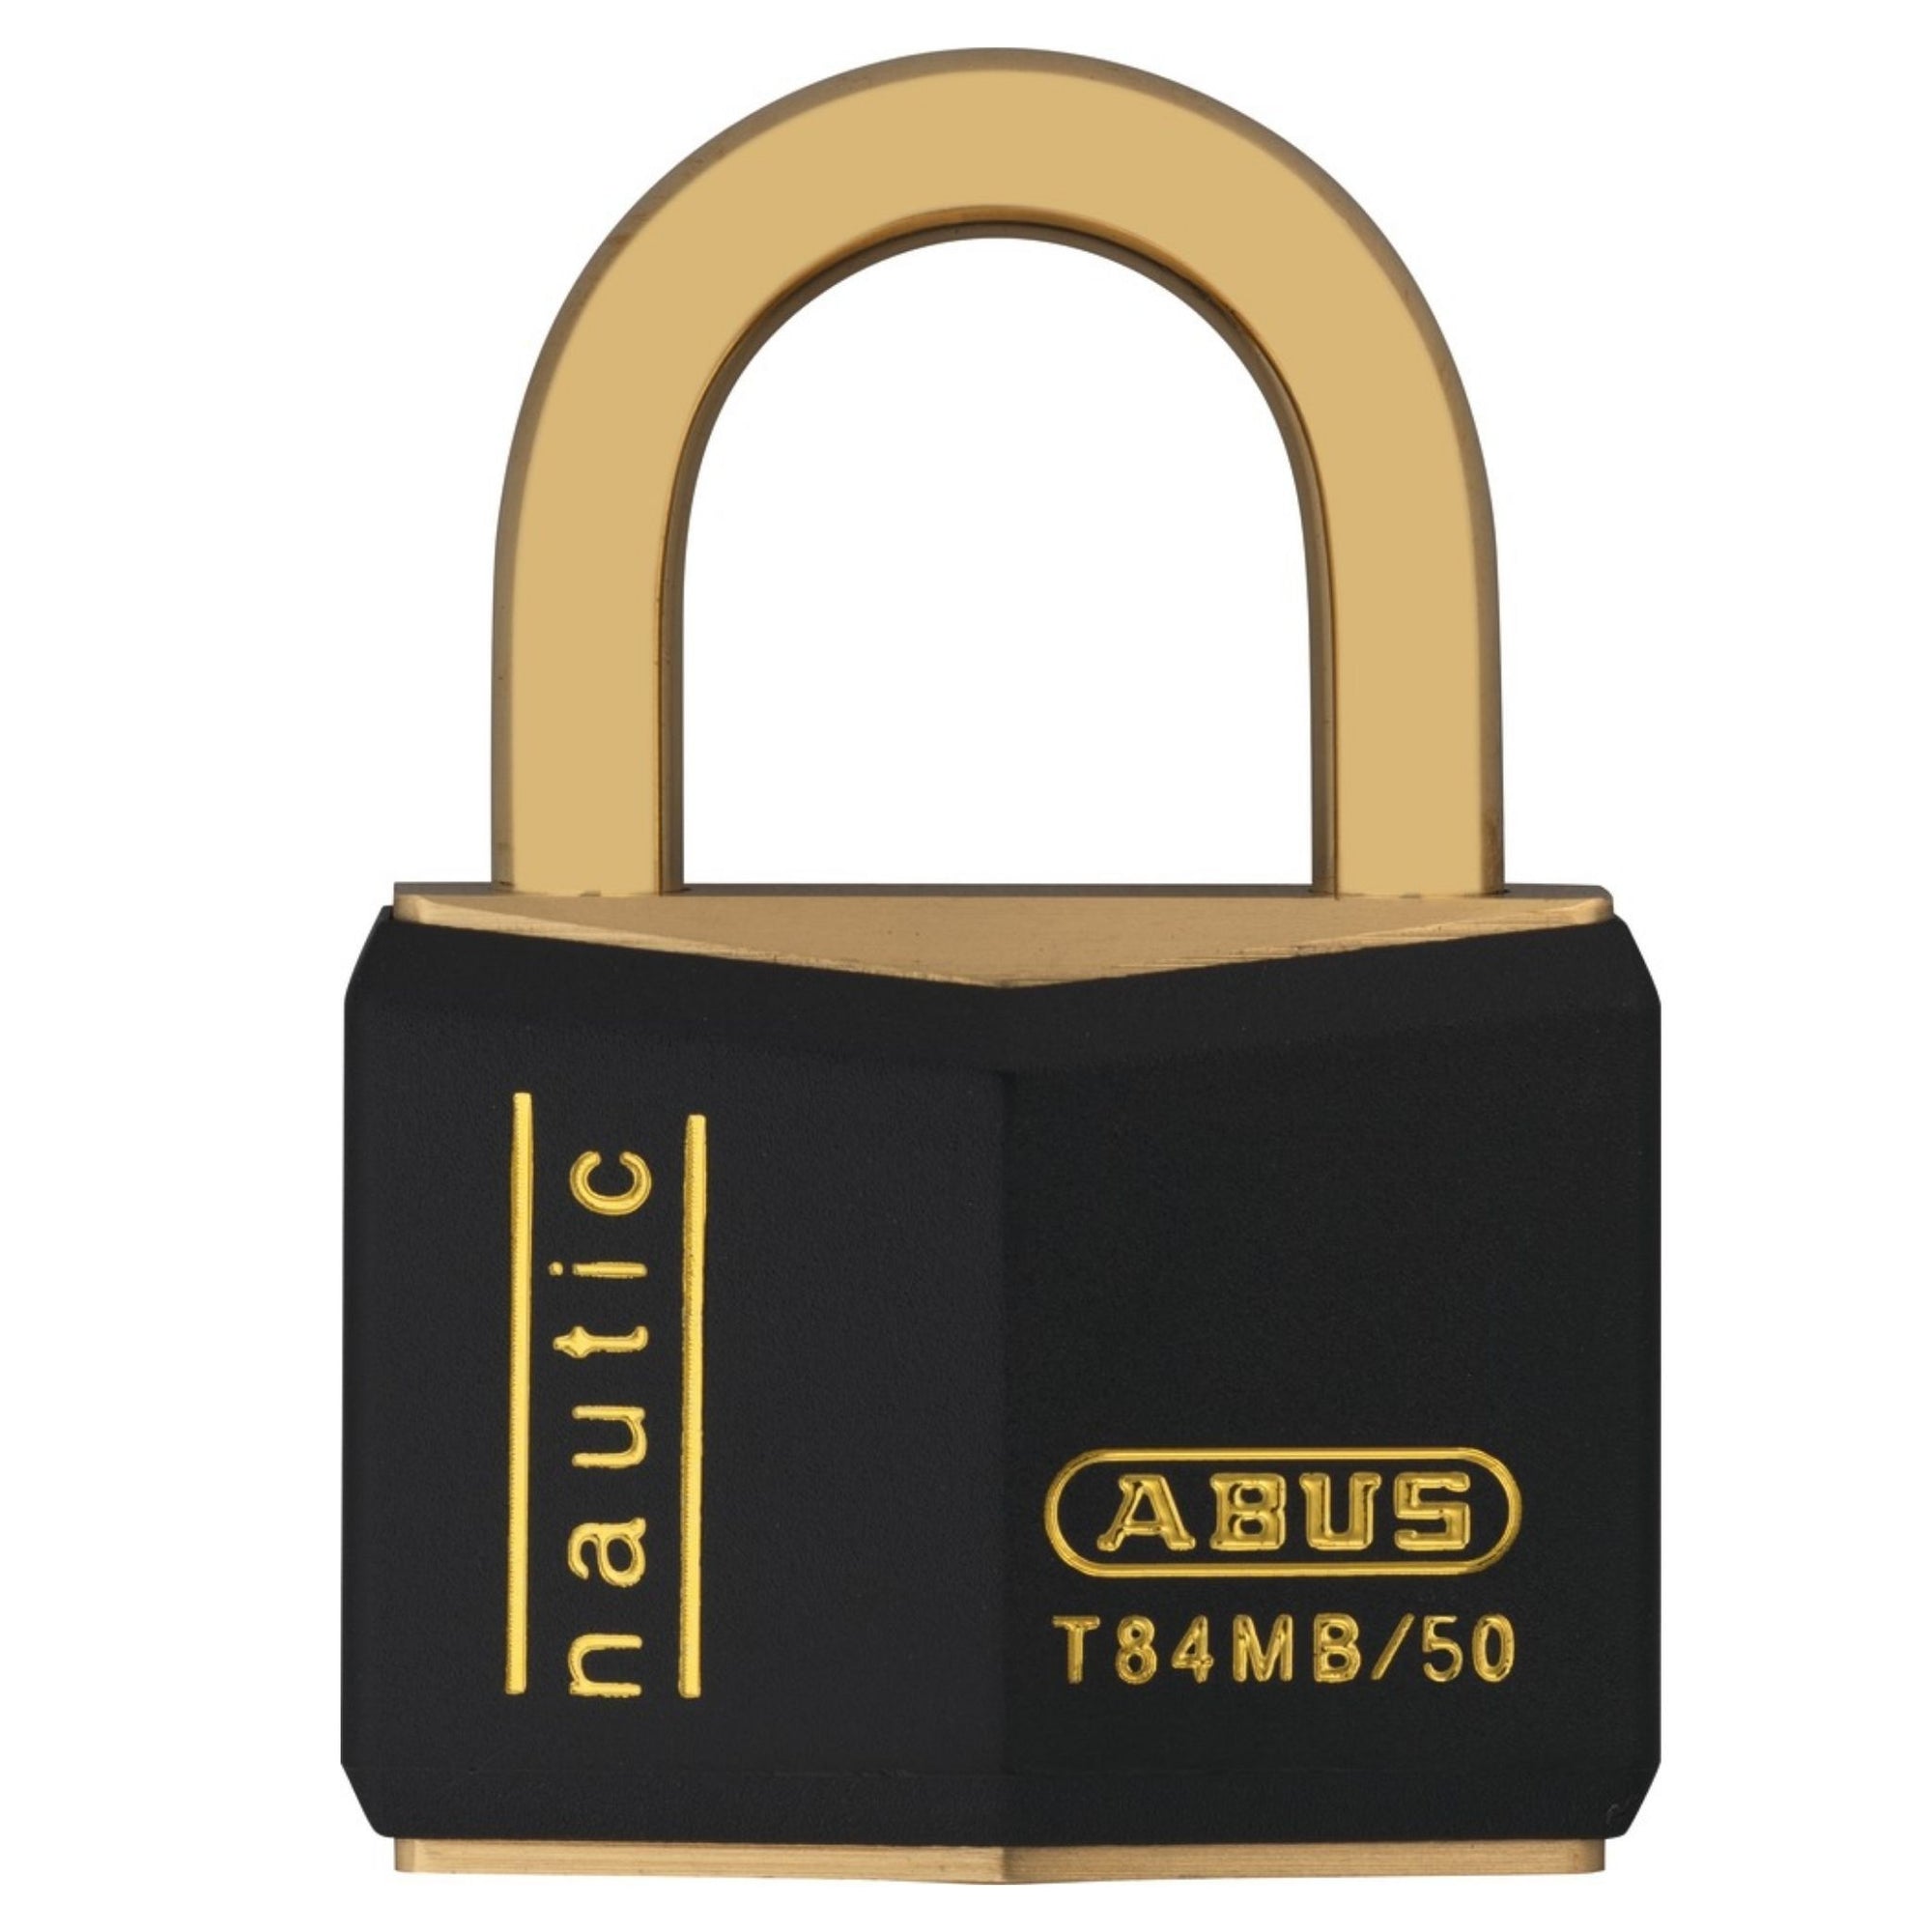 Abus T84MB/50 KA 8501 Weatherproof Brass Padlock Keyed Alike to Match Existing Key# KA8501 - The Lock Source